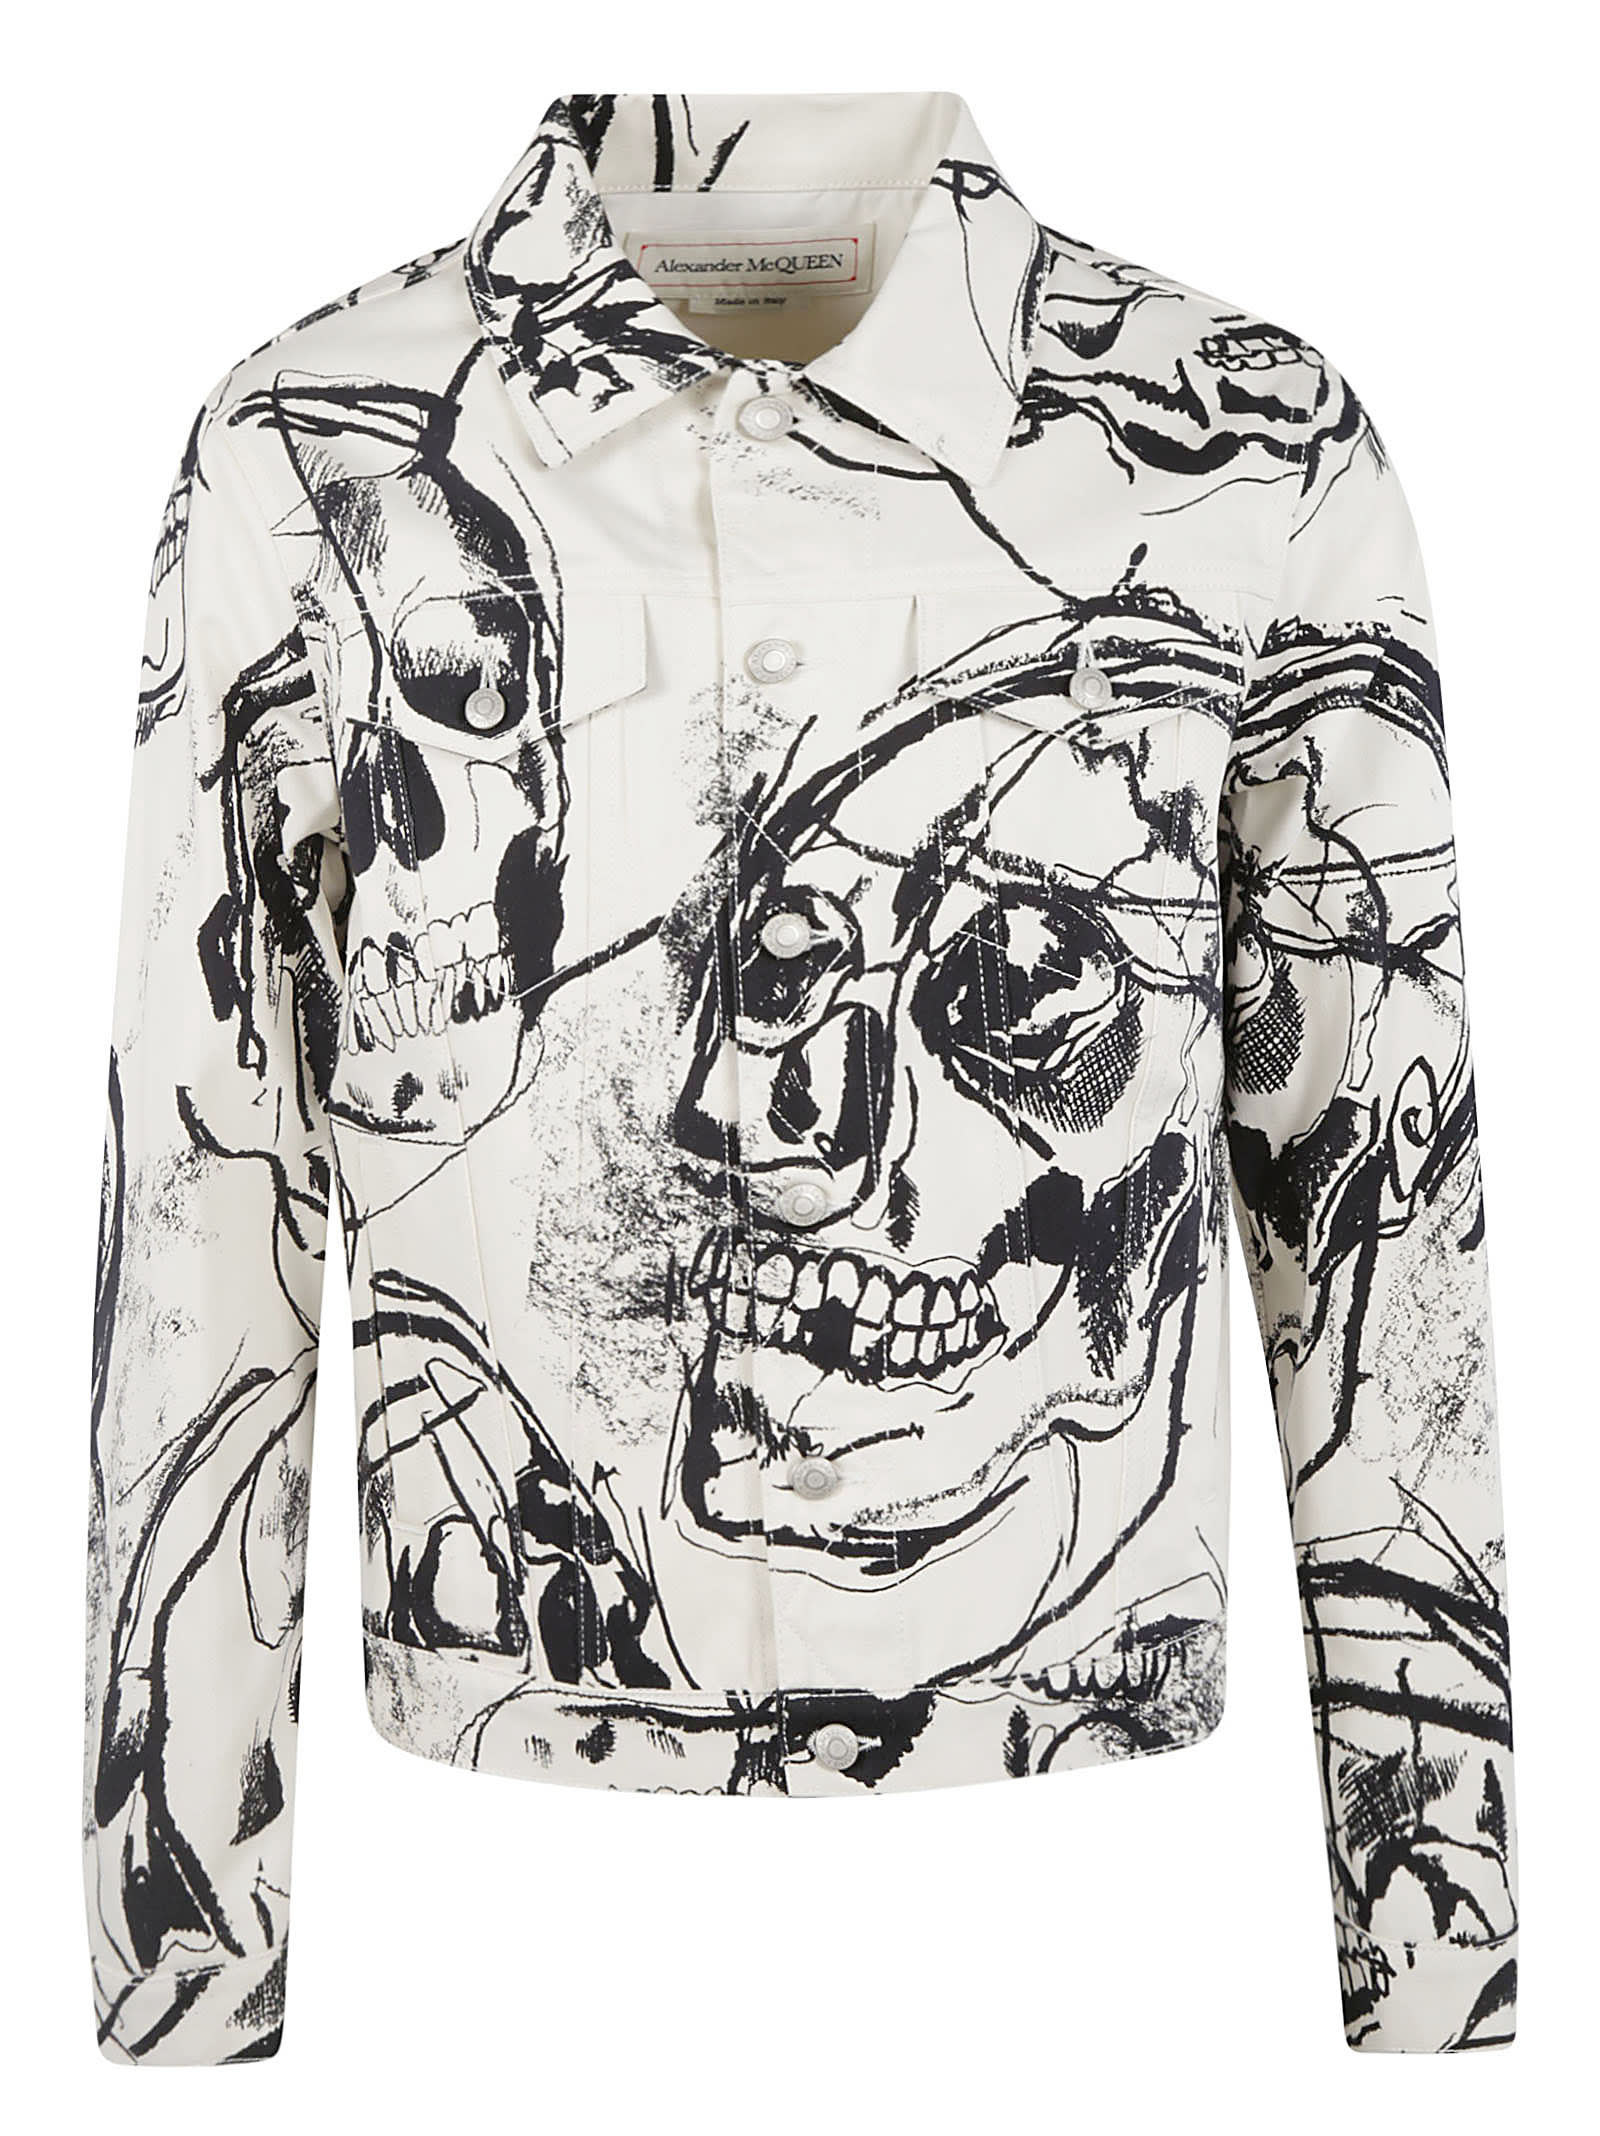 Alexander McQueen Painted Skull Print Shirt